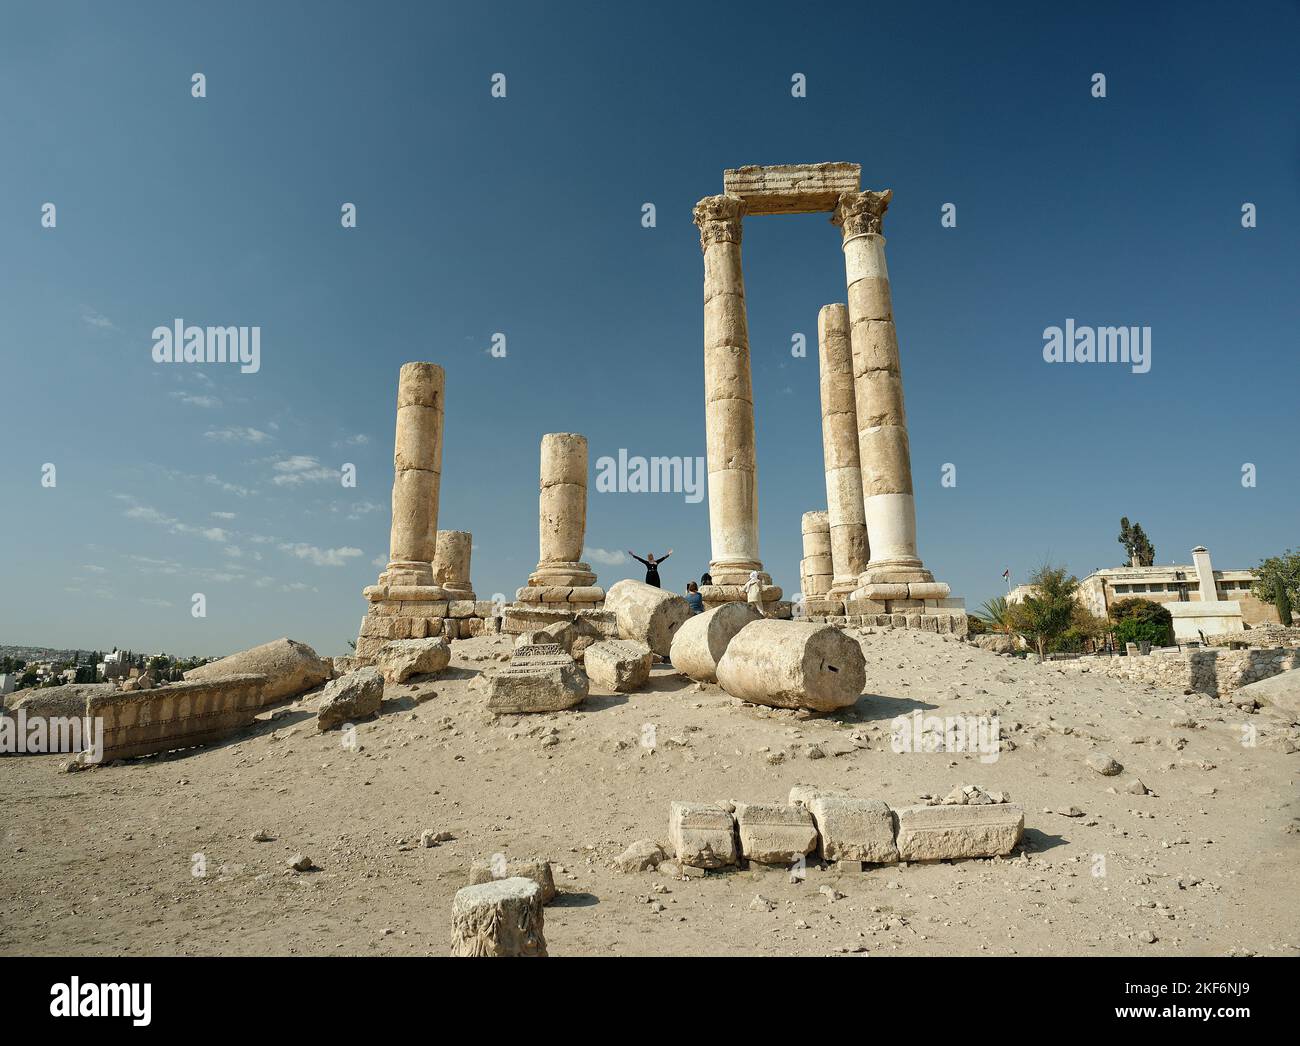 La Ciudadela de Ammán, la capital de Jordania. Antiguos edificios en ruinas con magníficas columnas corintias. Foto de stock